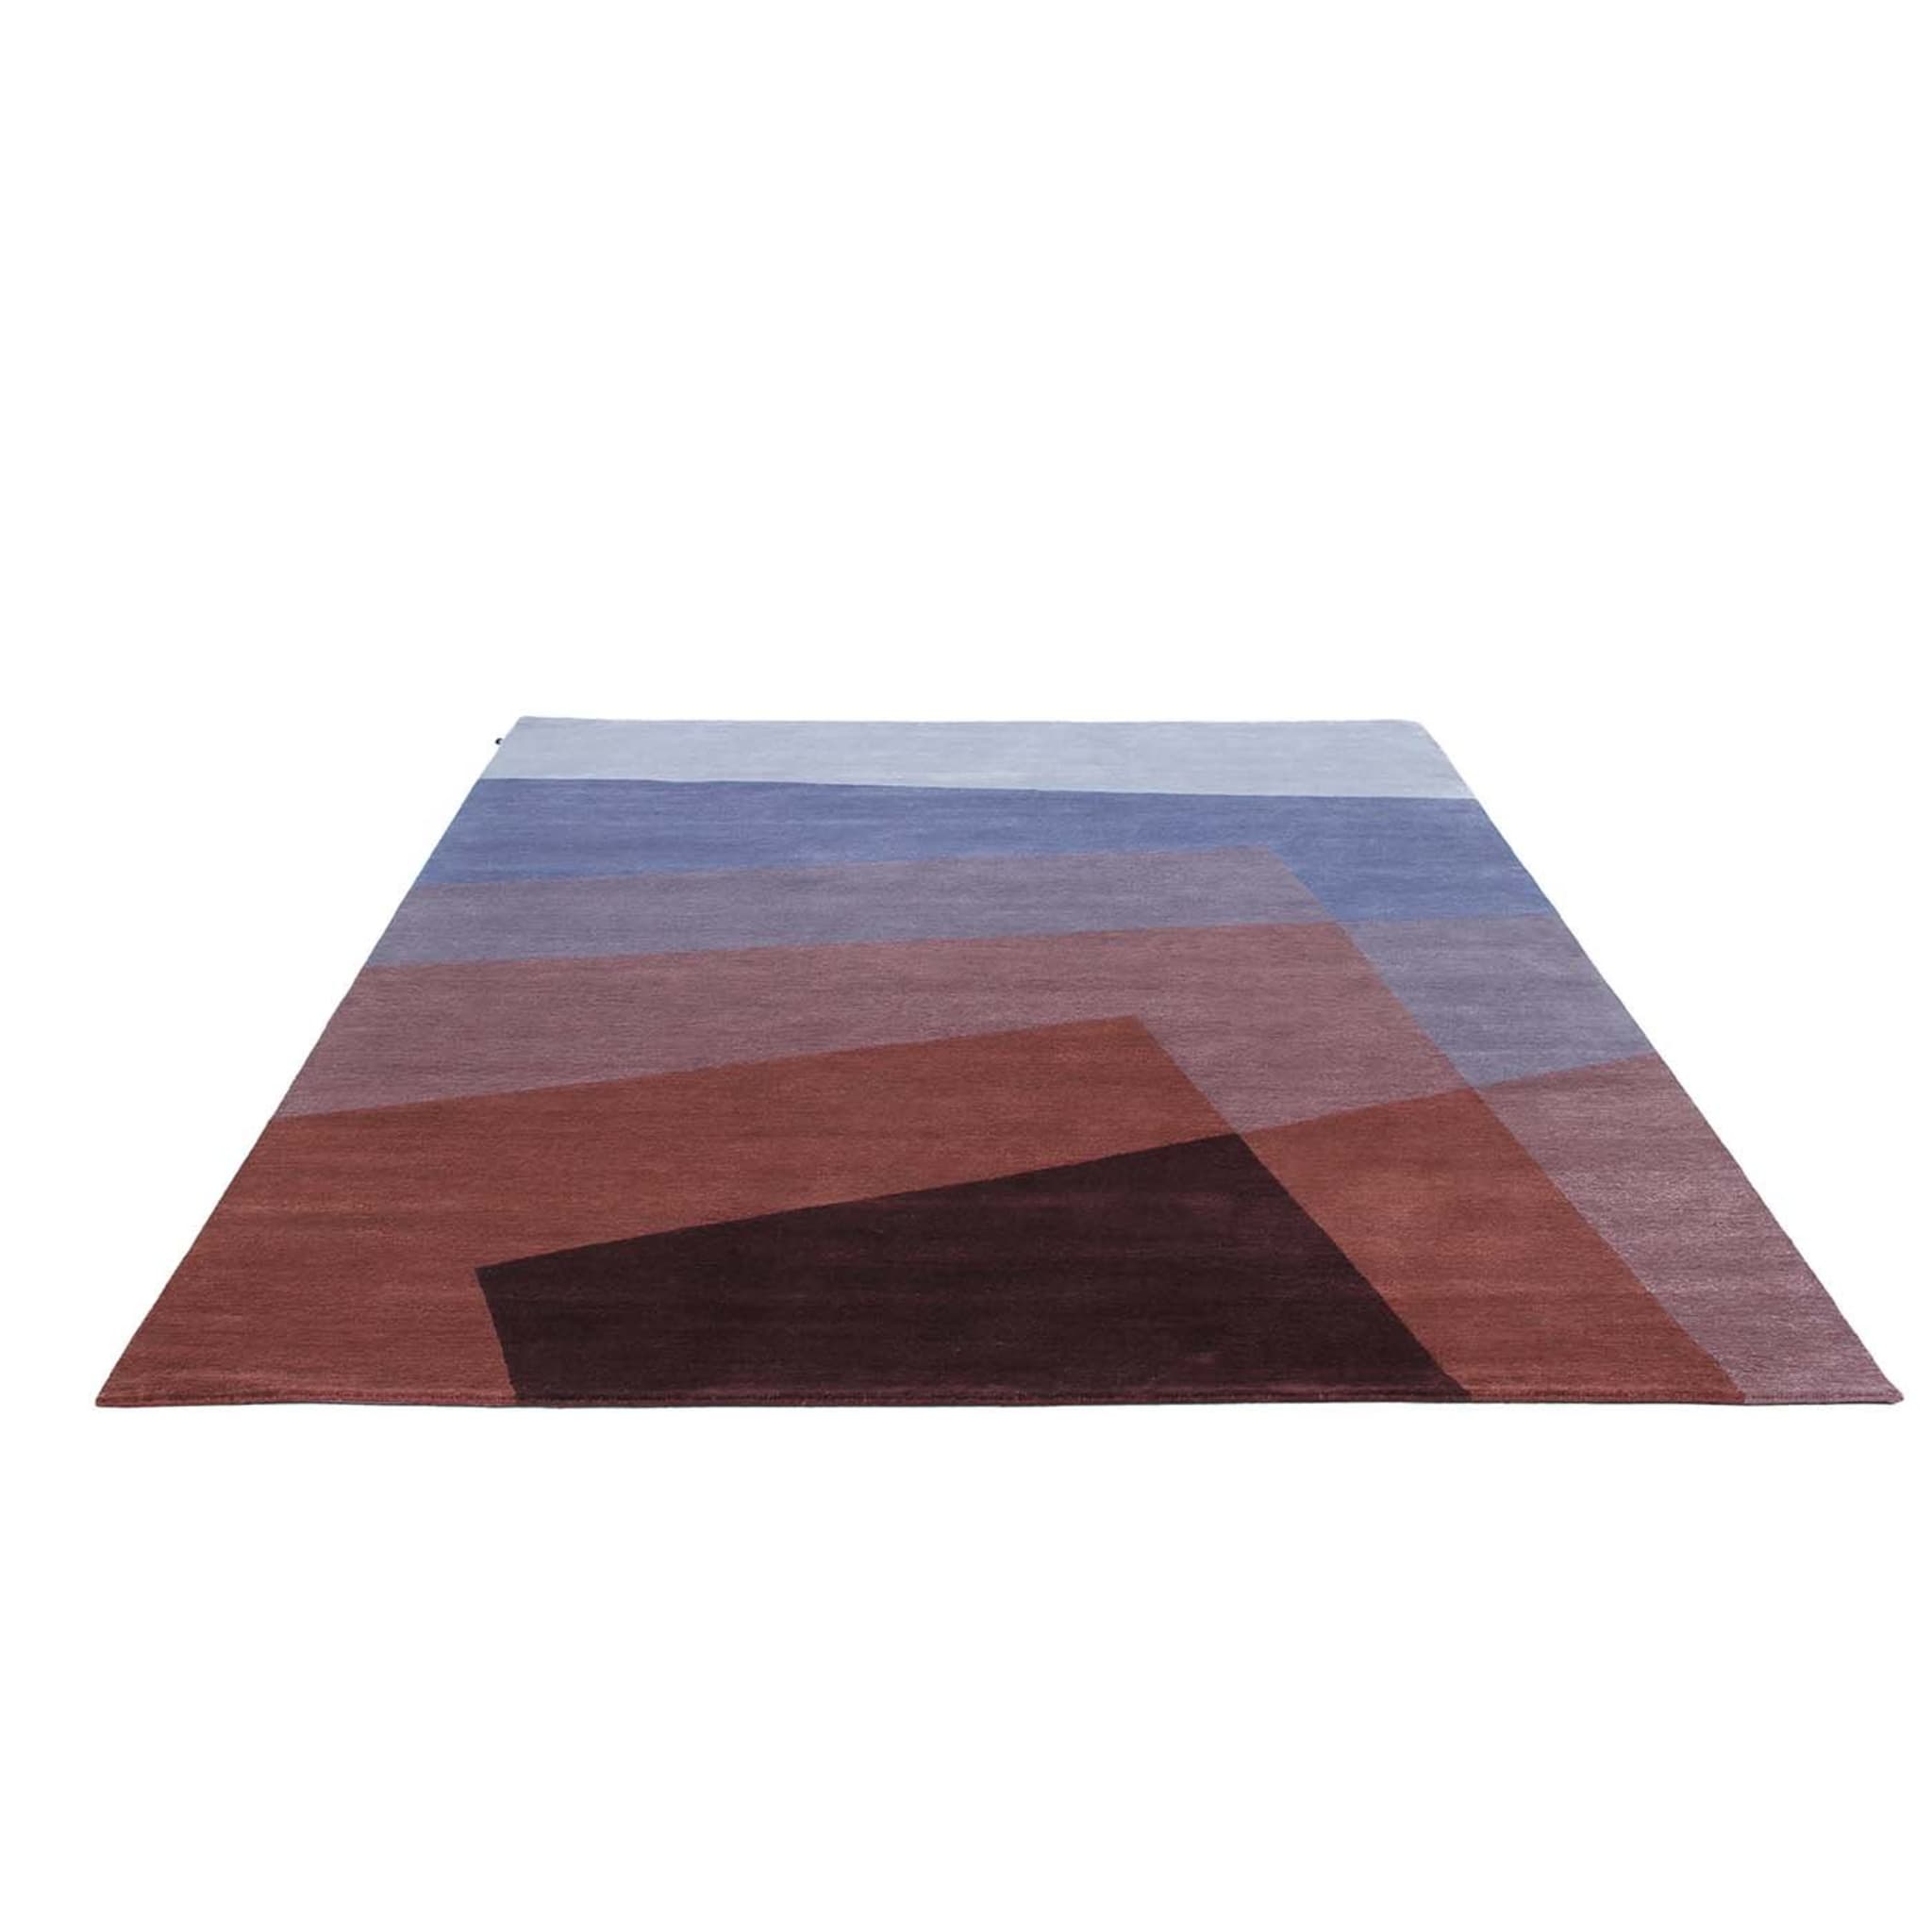 RD Shade Blue Carpet by Rodolfo Dordoni - Alternative view 3